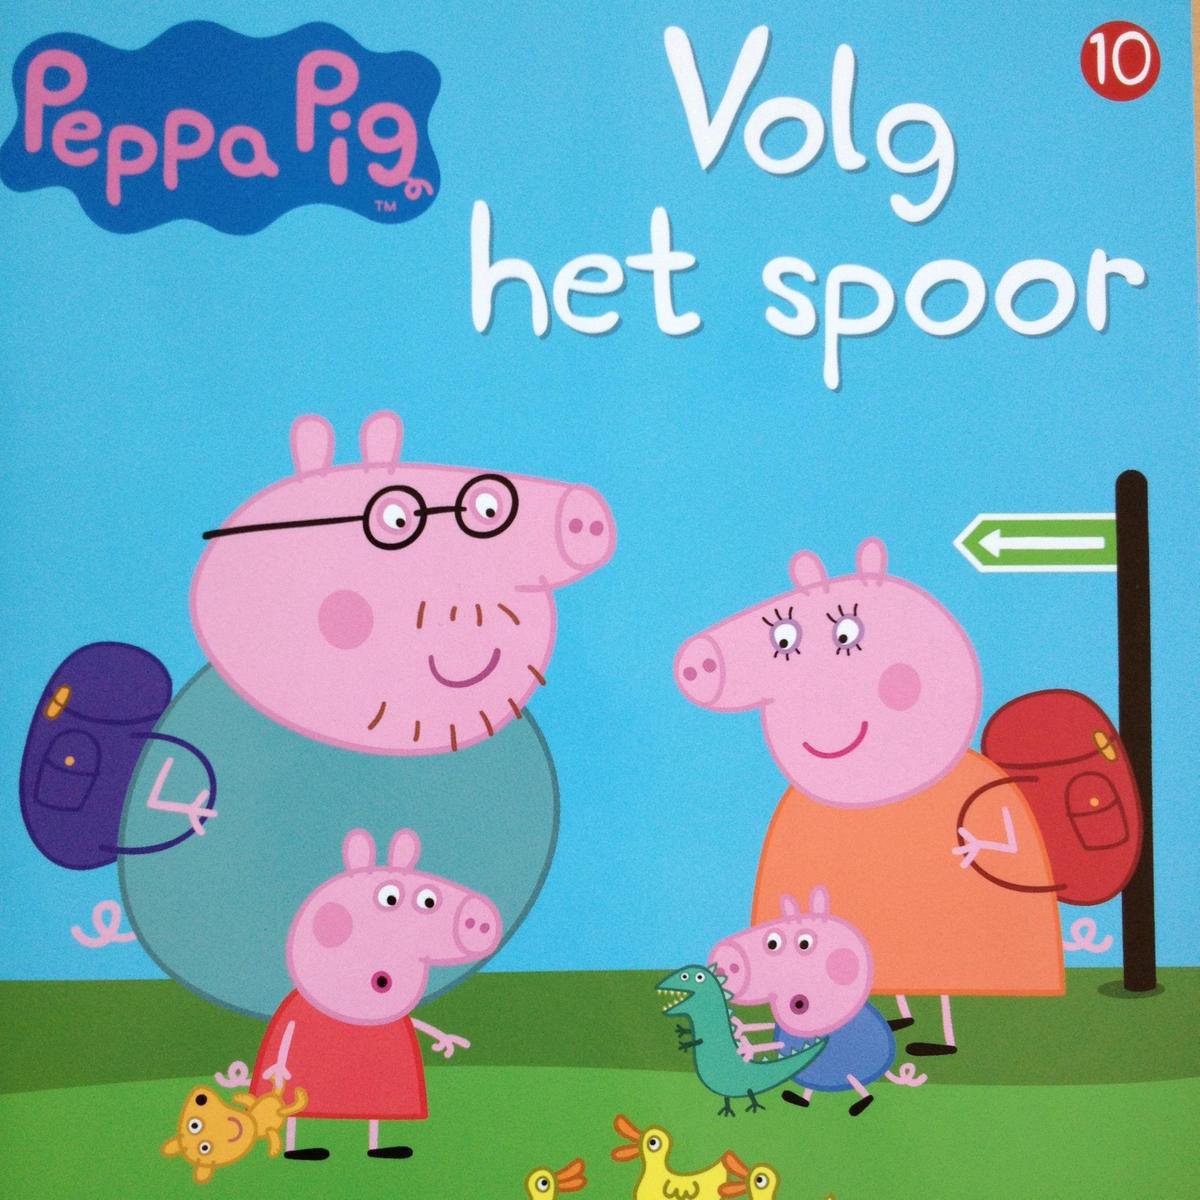 Peppa Pig 10 - Volg het spoor